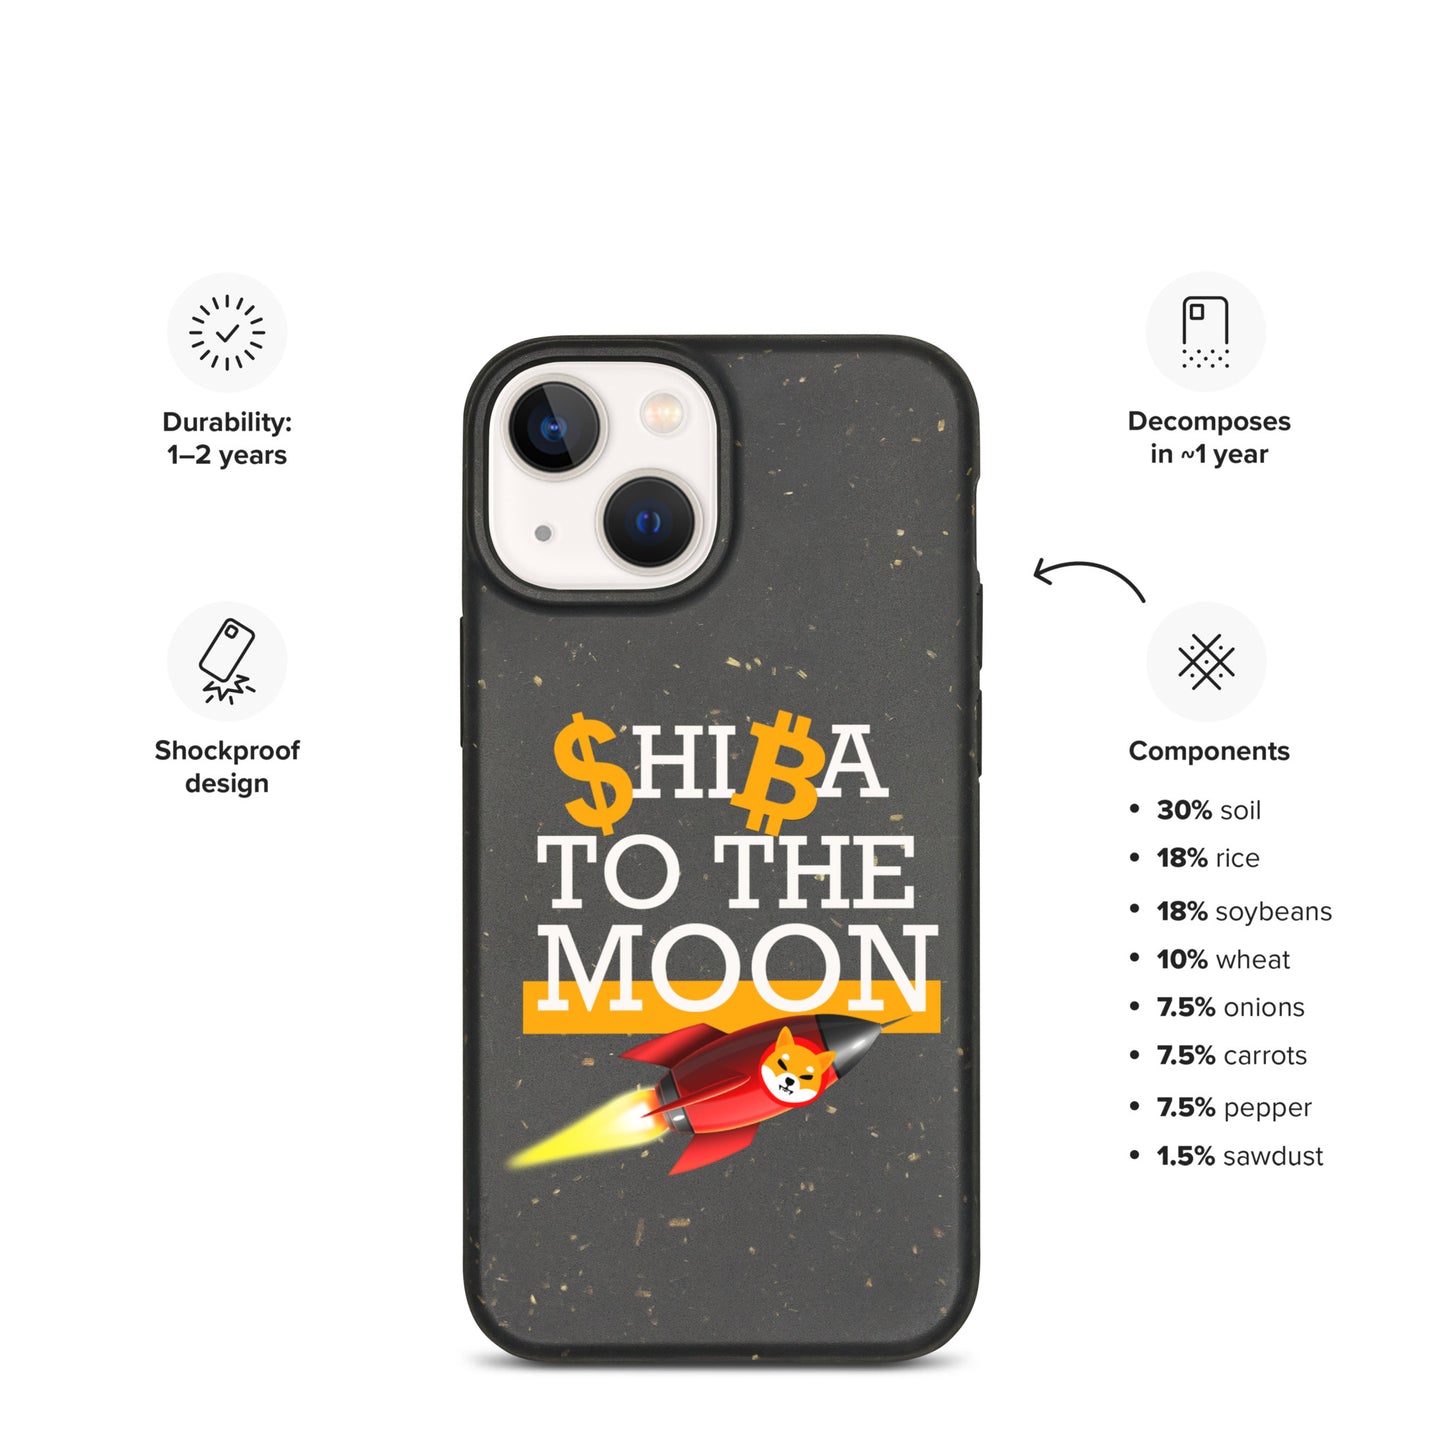 SHIBA TO THE MOON iPhone Case - biologisch abbaubar